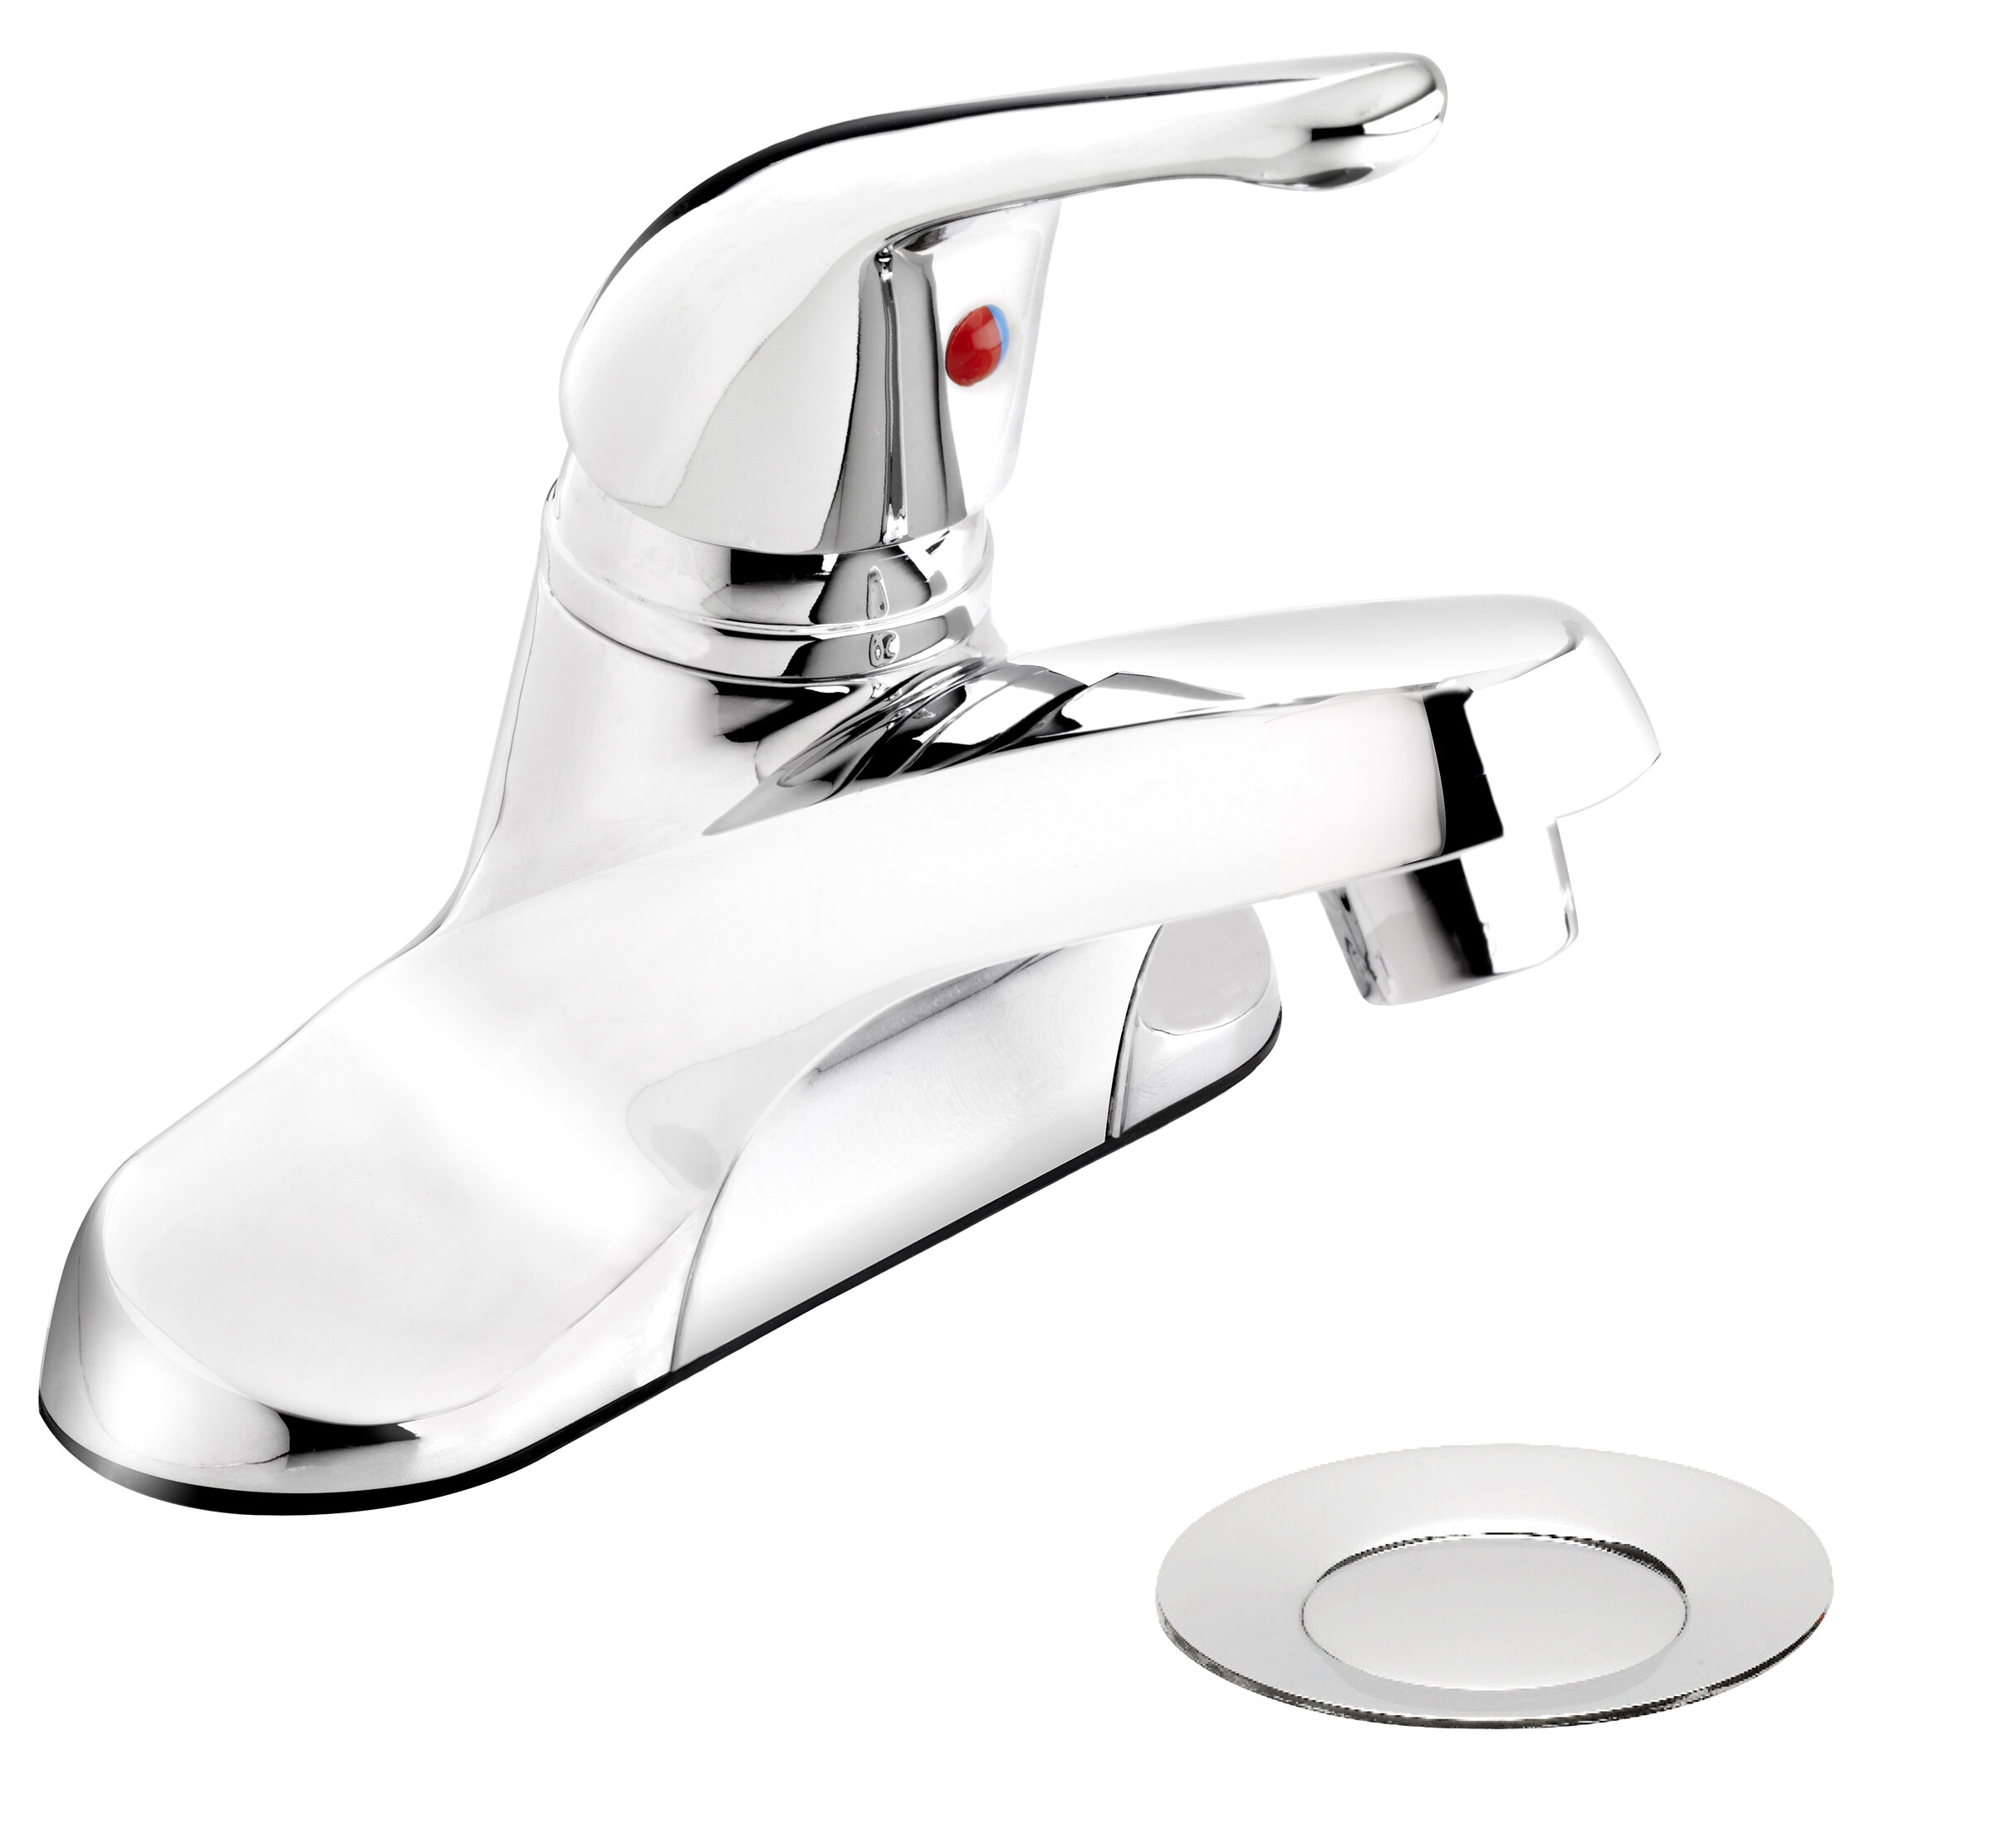 Keeney Manufacturing Company Belanger Centerset Bathroom Faucet